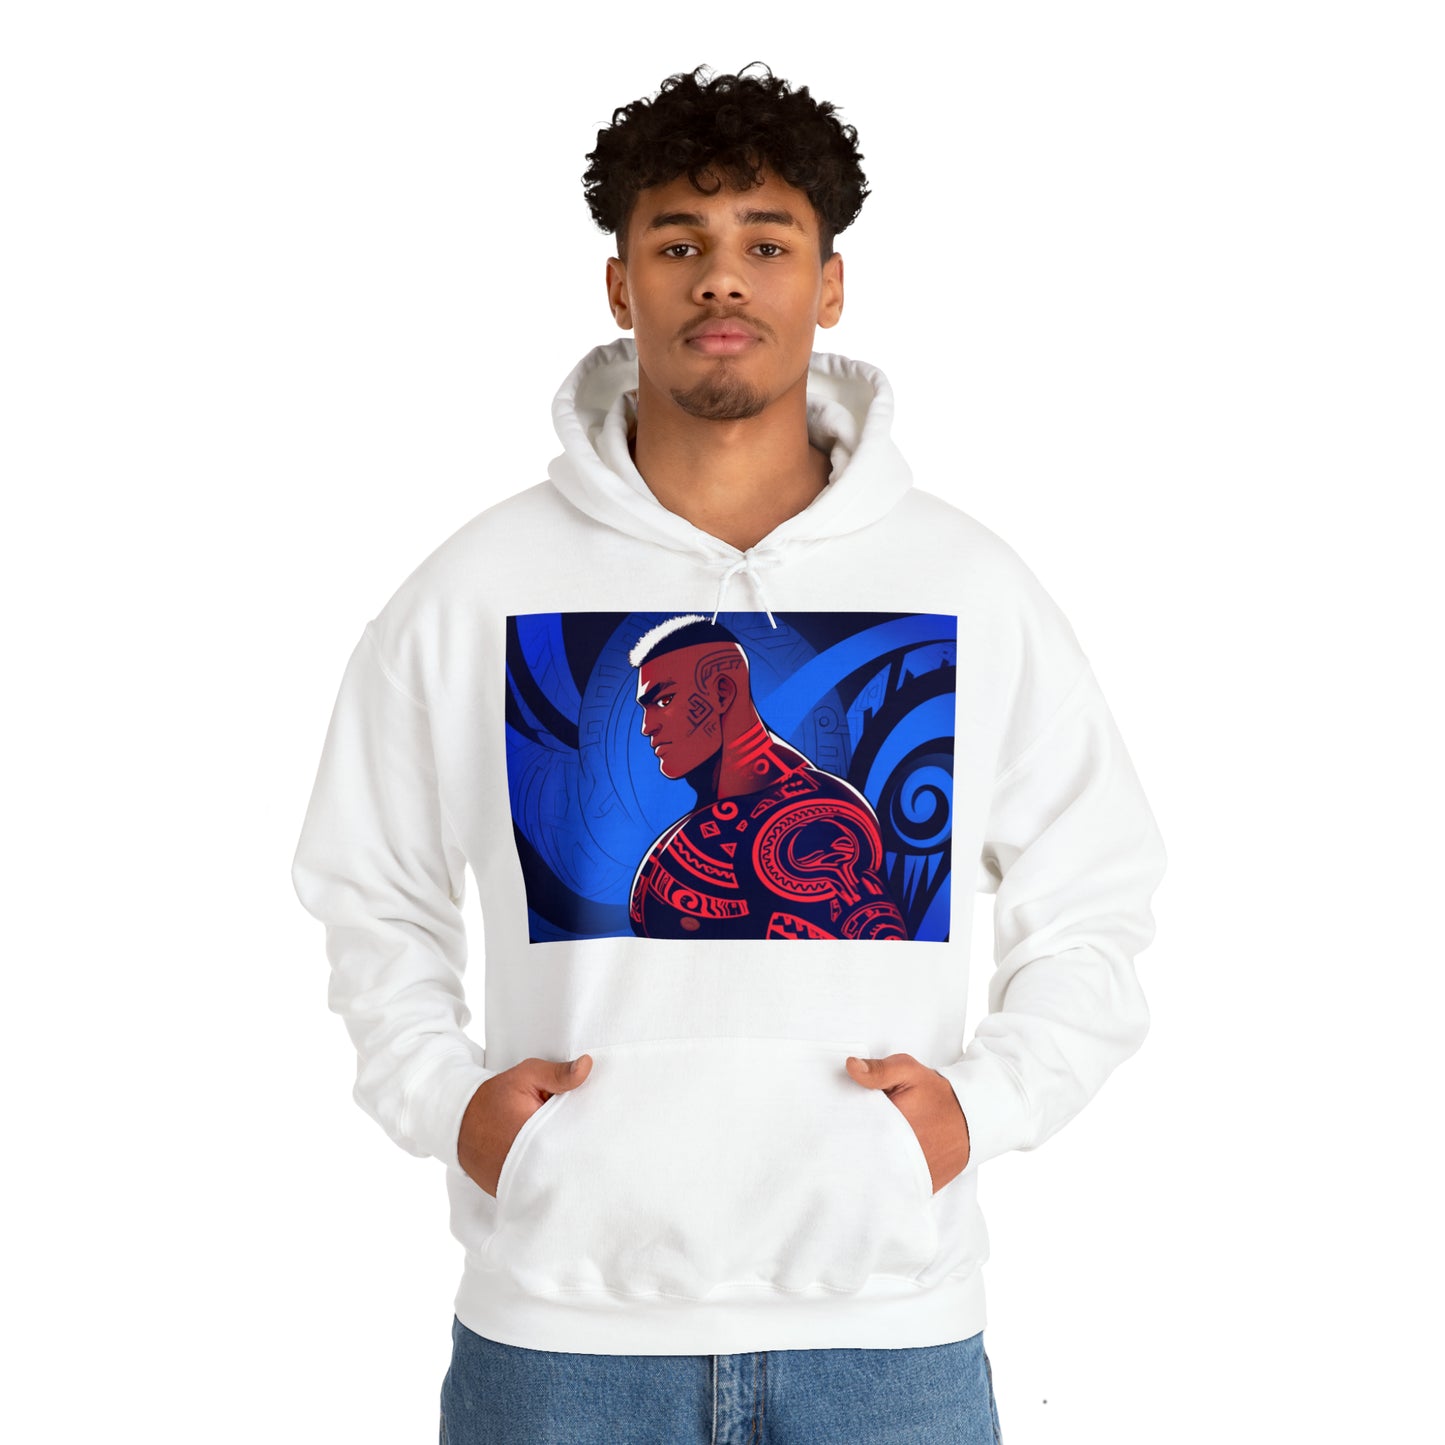 Samoa - light hoodies